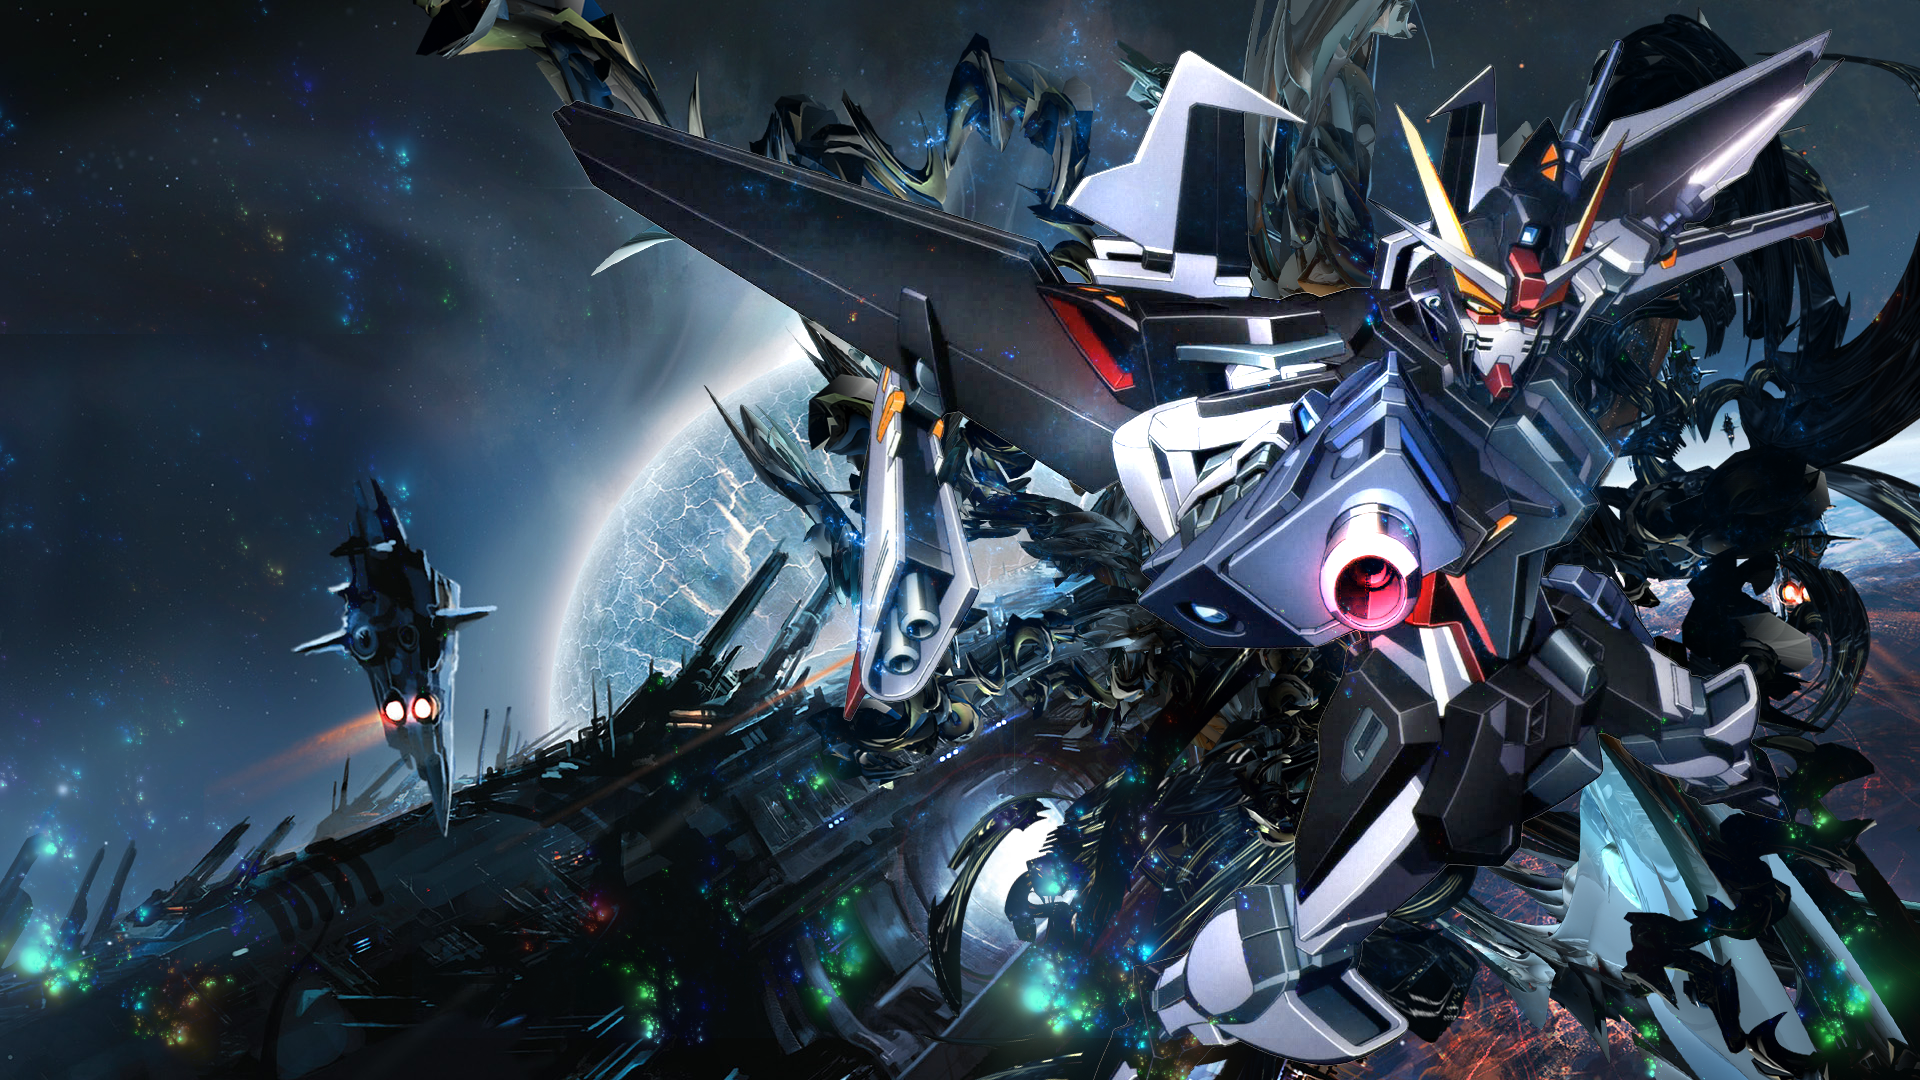 Gundam Full HD Wallpaper Widescreen Image For PC Desktop